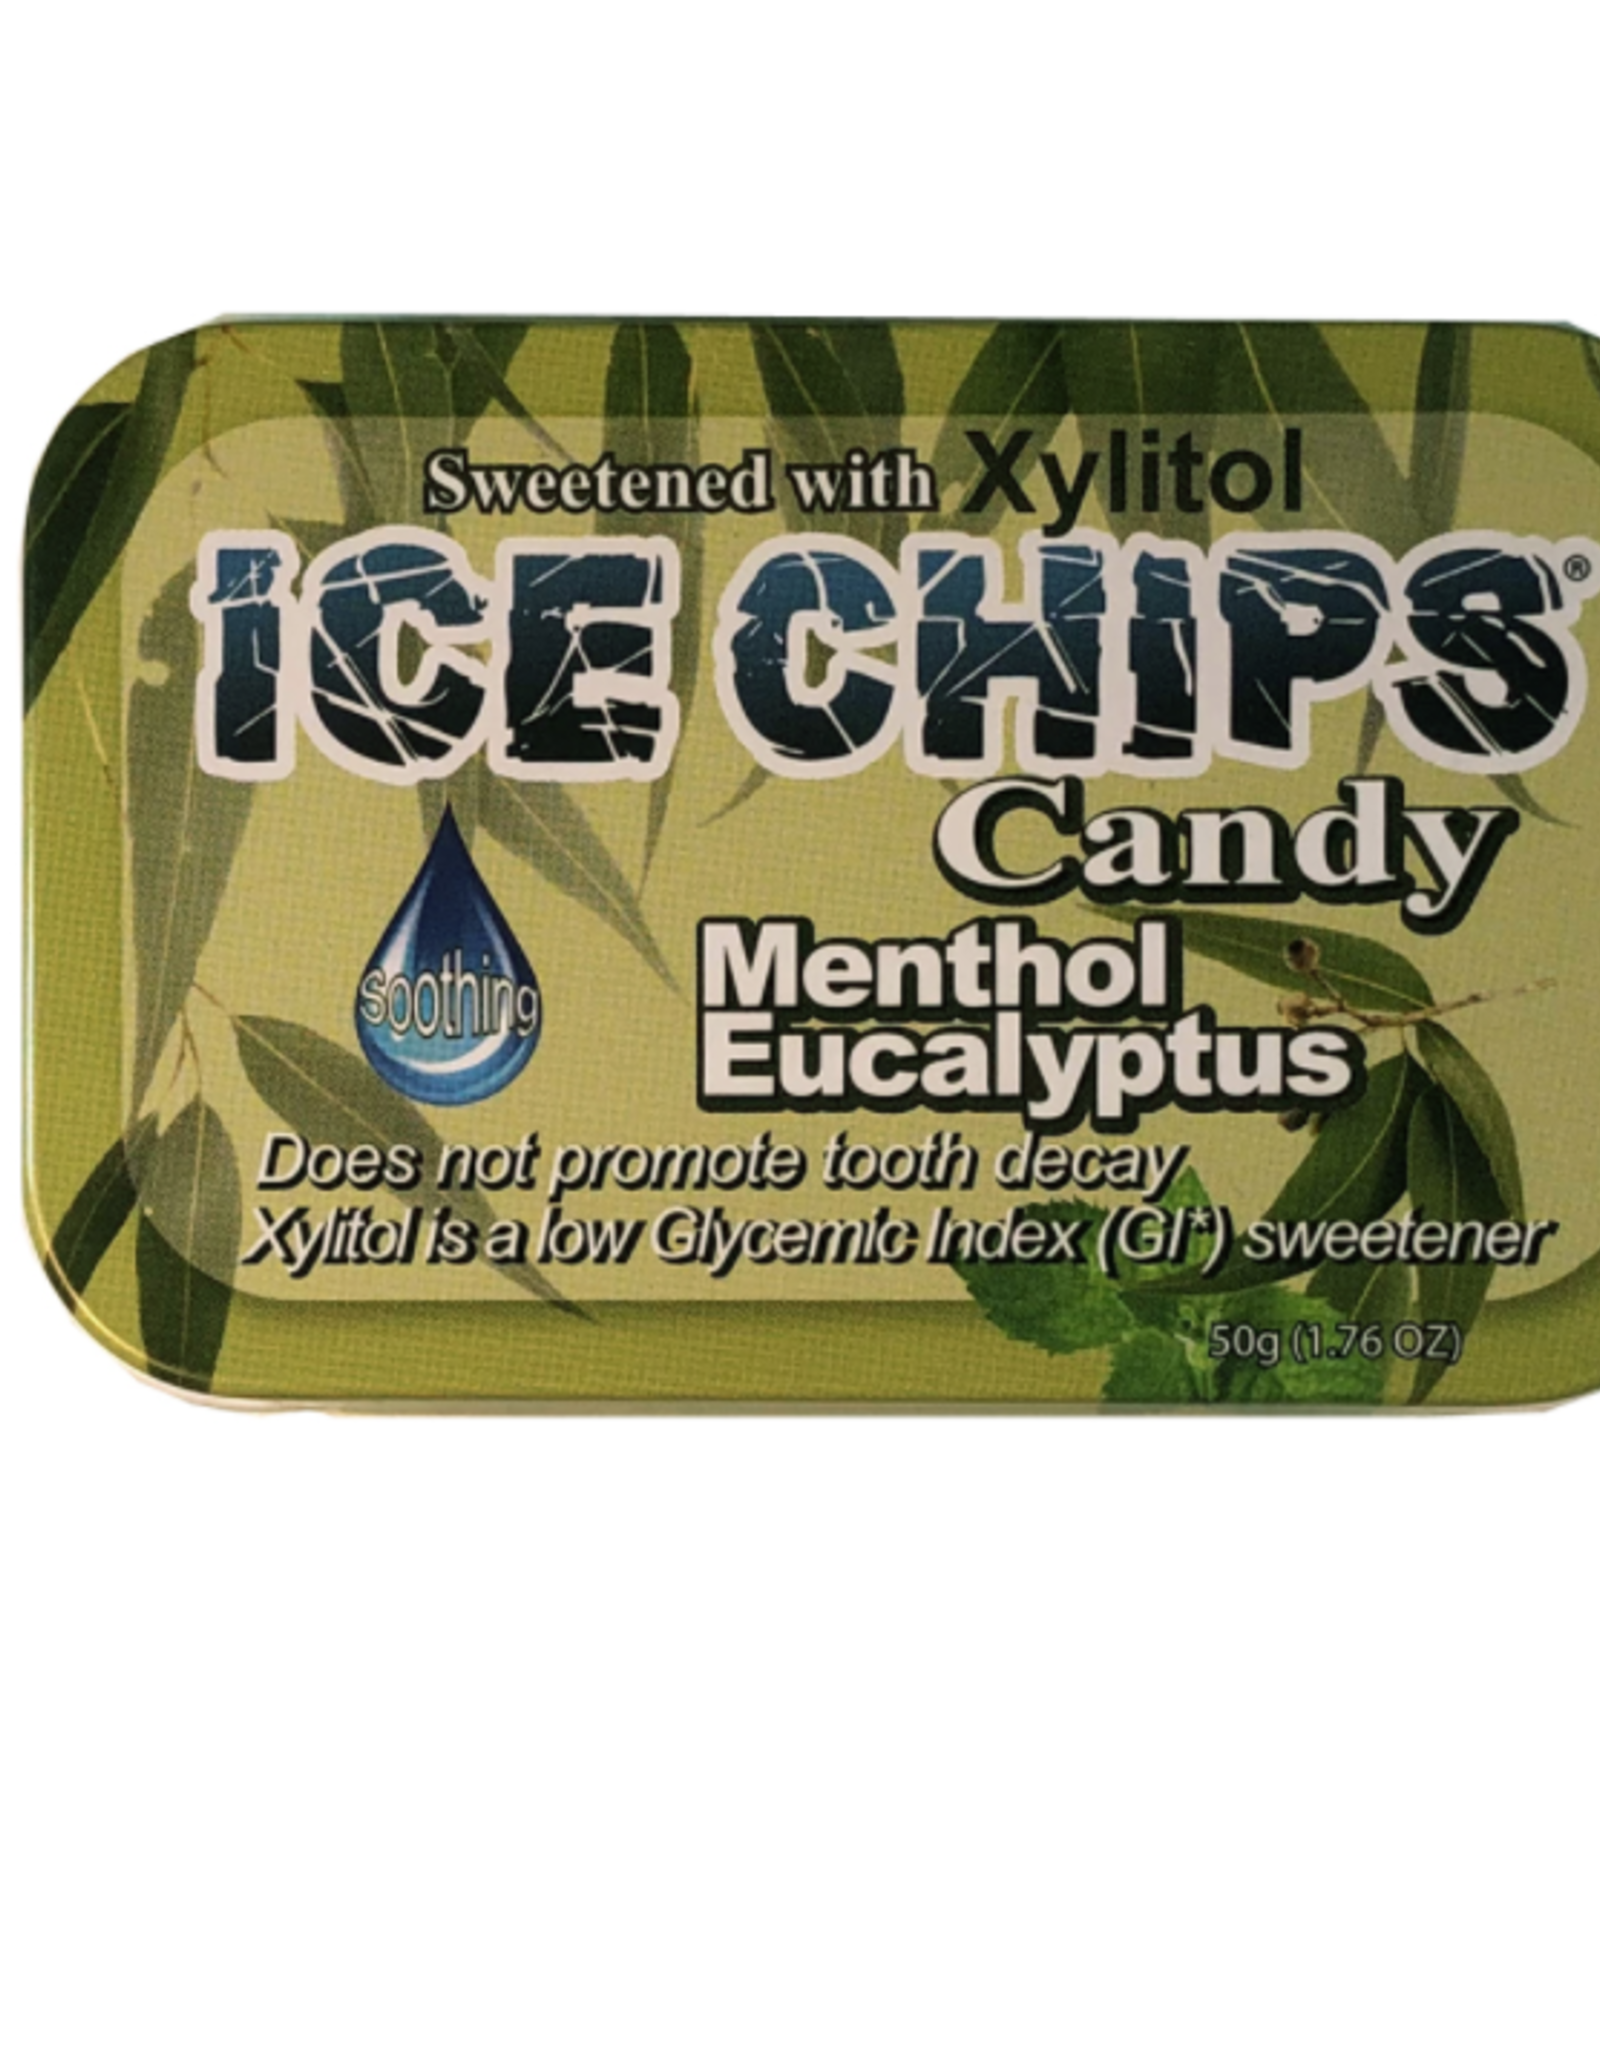 Ice Chips Ice Chips Menthol Eucalyptus